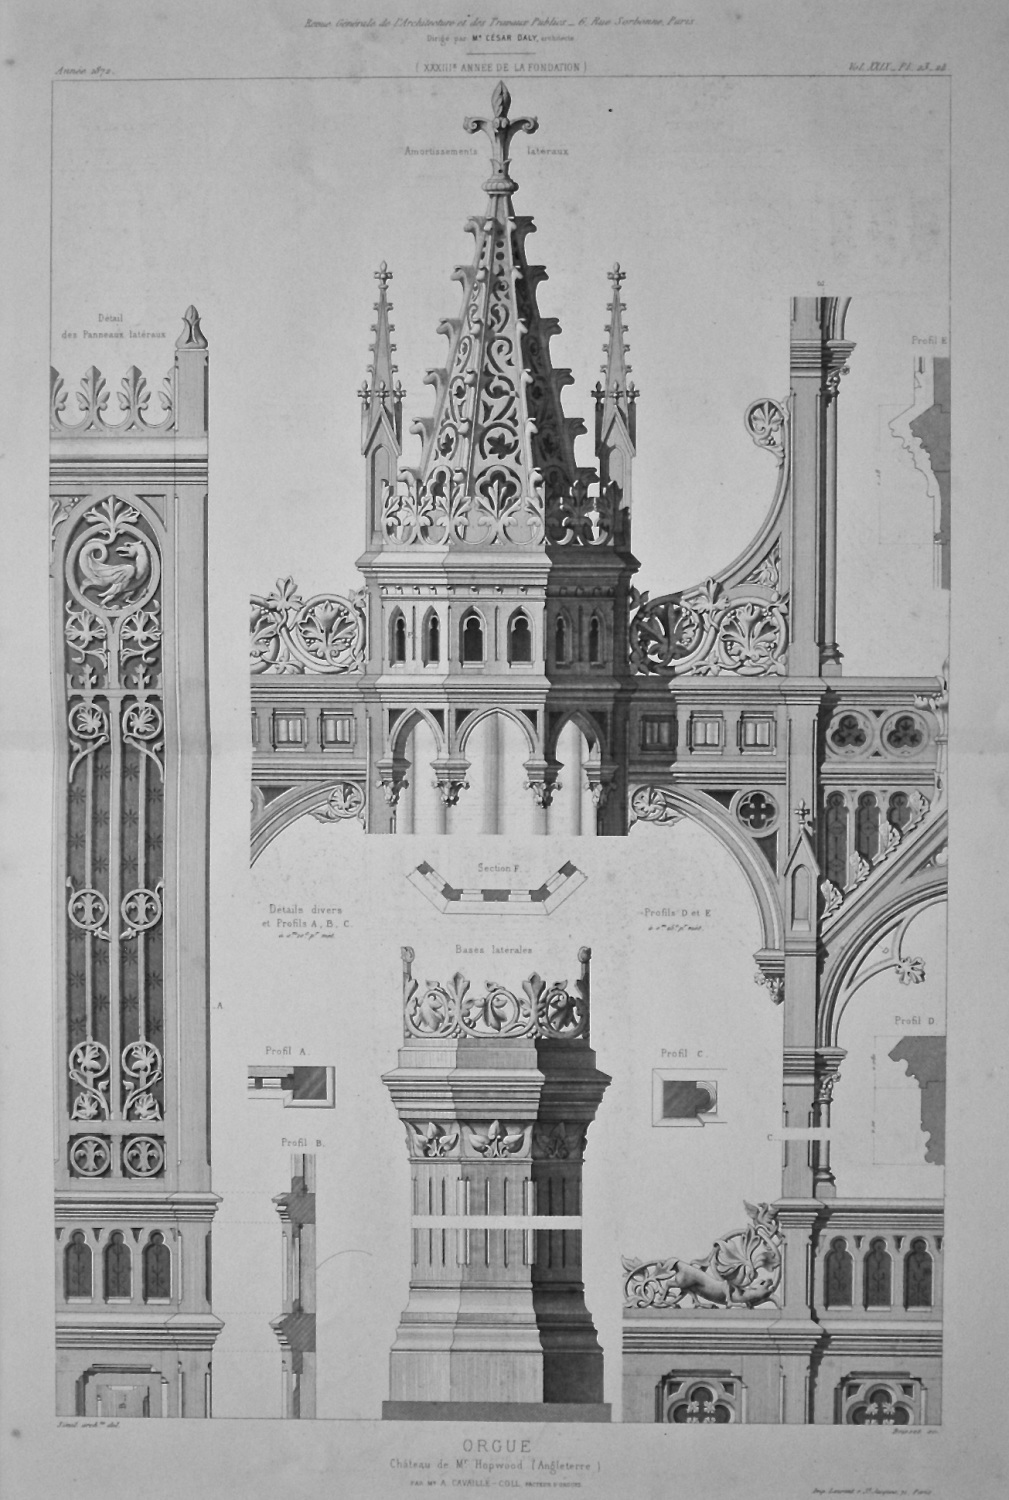 Orgue. Chateau de M. Hopwood (Angleterre). 1872